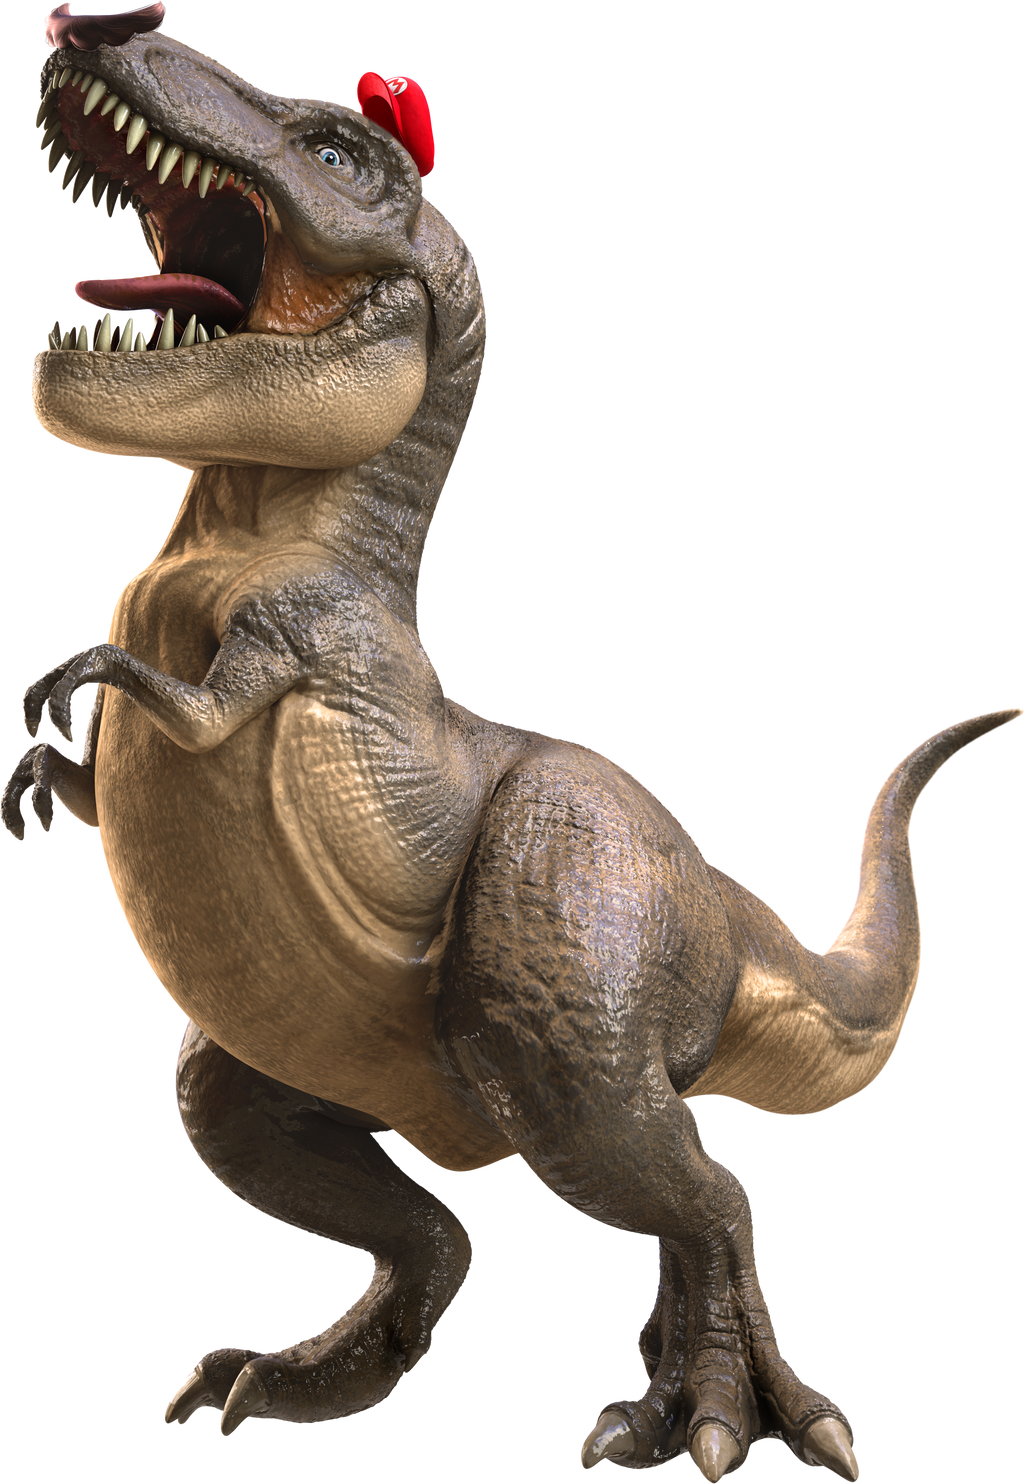 Jurassic World Tyrannosaurus Rex Render 13 by tsilvadino on DeviantArt